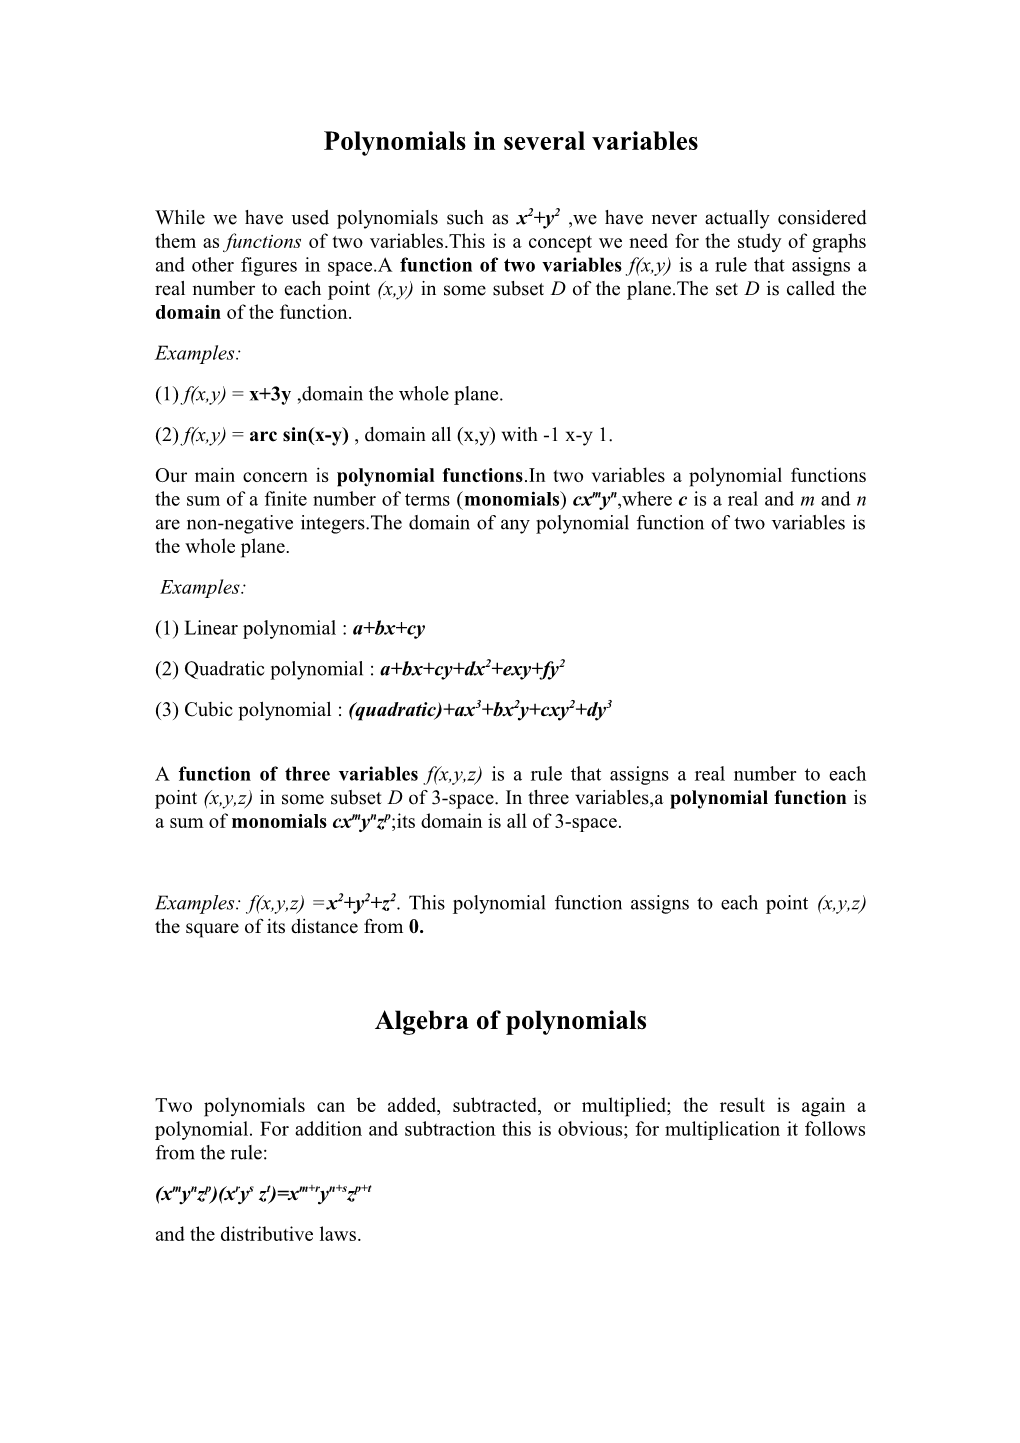 Polynomials in Several Variables